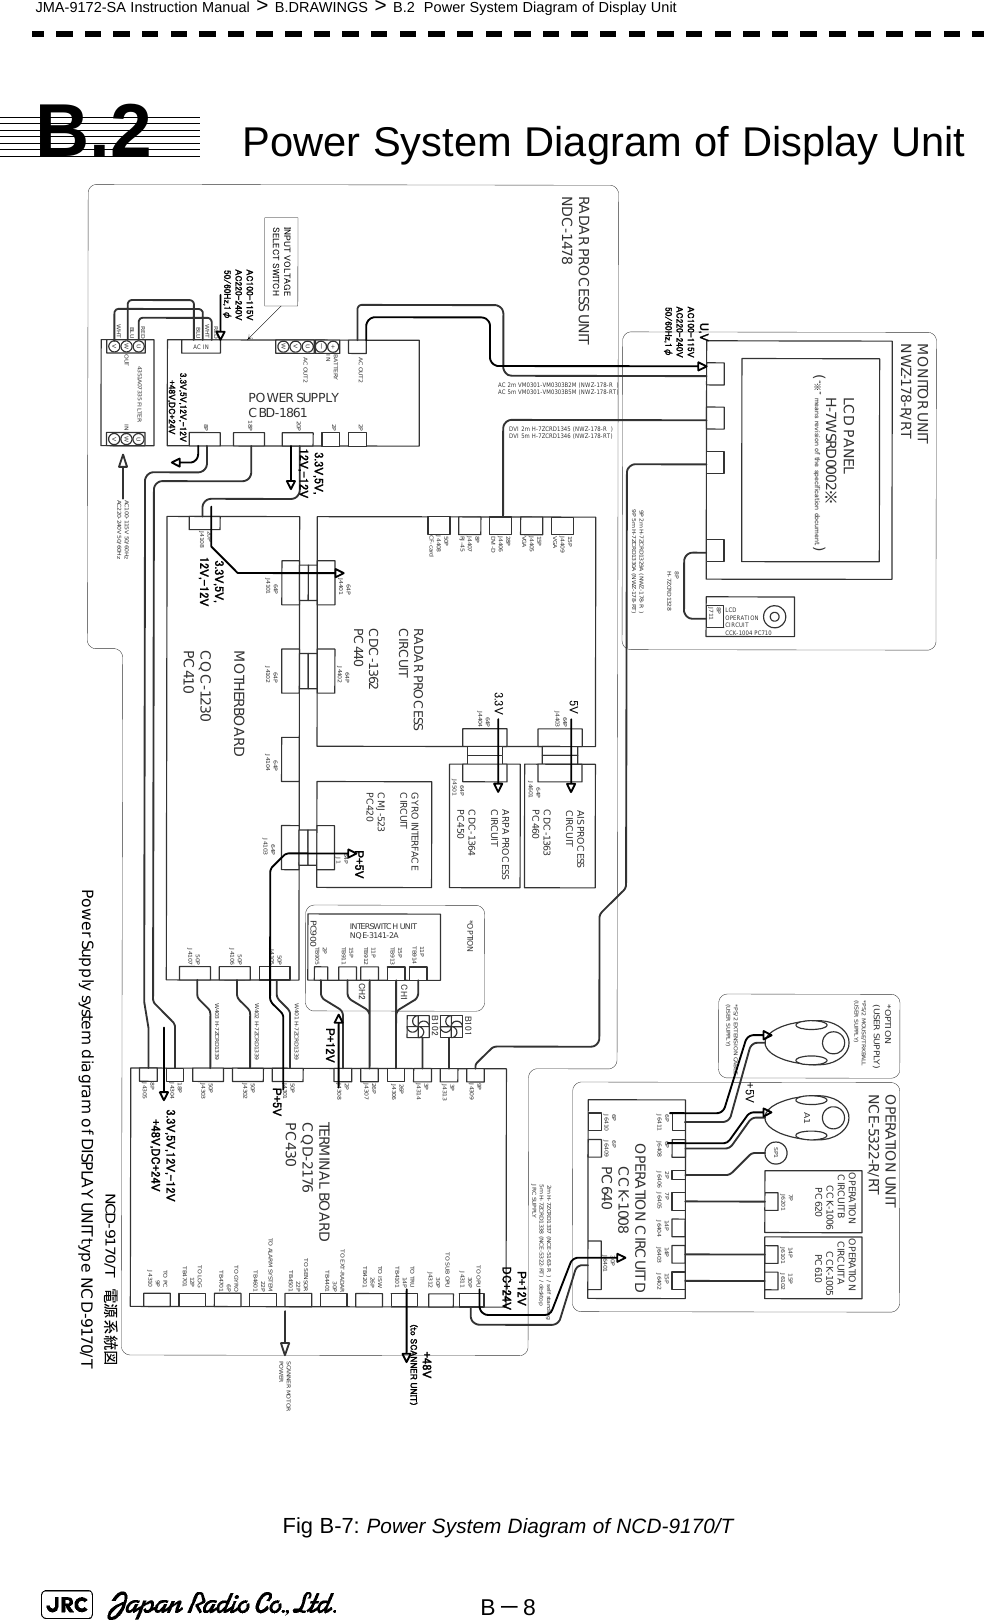 B－8JMA-9172-SA Instruction Manual &gt; B.DRAWINGS &gt; B.2  Power System Diagram of Display UnitB.2 Power System Diagram of Display UnitFig B-7: Power System Diagram of NCD-9170/T2PJ430826PJ430726PJ430650PJ430118PJ43048PJ43053PJ43133PJ43149PJ430914PTB4101TO TRUTO ISW26PTB4201TO EXT-RADAR30PTB4401TO SENSOR22PTB4501TO ALARM SYSTEM22PTB4601TO GYRO6PTB4701TO LOG12PTB4701TO PC9PJ4310TERMINAL BOARDCQD-2176PC43050PJ430250PJ430330PJ4311TO OPU30PJ4312TO SUB OPU6PJ64116PJ64106PJ64096PJ64082PJ64067PJ640514PJ640414PJ640315PJ640230PJ6401OPERATION CIRCUIT D      CCK-1008      PC64014PJ610115PJ6102OPERATION  CIRCUIT A     CCK-1005      PC6107PJ6201OPERATION  CIRCUIT B     CCK-1006      PC620SP1A1*PS/2 EXTENSION CABLE(USER SUPPLY)OPERATION UNITNCE-5322-R/RT2m H-7ZCRD1337 (NCE-5163-R  ) / self standing5m H-7ZCRD1338 (NCE-5322-RT) / desktopJRC SUPPLYB101B102PC90011PTB91415PTB91311PTB91215PTB9112PTB905INTERSWITCH UNITNQE-3141-2ACH1CH250PJ410550PJ410650PJ4107*OPTIONW401 H-7ZCRD1339W402 H-7ZCRD1339W403 H-7ZCRD133964PJ410364PJ410464PJ410264PJ410164PJ440164PJ440264PJ1GYRO INTERFACECIRCUITCMJ-523PC420RADAR PROCESSCIRCUITCDC-1362PC440MOTHERBOARDCQC-1230PC41064PJ440364PJ4404AIS PROCESSCIRCUITCDC-1363PC46064PJ460164PJ4501ARPA PROCESSCIRCUITCDC-1364PC45015PJ4409VGA15PJ4405VGA28PJ4406DVI-D8PJ4407RJ-4550PJ4408CF-cardLCDOPERATIONCIRCUITCCK-1004 PC7108PJ711MONITOR UNITNWZ-178-R/RTLCD PANELH-7WSRD0002※8PH-7ZCRD13289P 2m H-7ZCRD1329A (NWZ-178-R  )9P 5m H-7ZCRD1330A (NWZ-178-RT)DVI 2m H-7ZCRD1345 (NWZ-178-R  )DVI 5m H-7ZCRD1346 (NWZ-178-RT)20PJ41088PPOWER SUPPLYCBD-186118P20P*PS/2 MOUSE/TRKBALL(USER SUPPLY)*OPTION(USER SUPPLY)2P2PAC OUT2+ーUVWBATTERYINAC OUT2AC INUWVUWV4351A07335 FILTERINOUTREDWHTBLUREDWHTBLUAC 2m VM0301-VM0303B2M (NWZ-178-R  )AC 5m VM0301-VM0303B5M (NWZ-178-RT)AC100-115V 50/60HzAC220-240V 50/60HzNCD-9170/T電源系統図Power Supply system diagram of DISPLAY UNIT type NCD-9170/TRADAR PROCESS UNITNDC-1478SCANNER MOTORPOWER INPUT VOLTAGESELECT SWITCHAC100-115VAC220-240V50/60Hz,1φ5V3.3VU,VAC100-115VAC220-240V50/60Hz,1φ3.3V,5V,12V,-12V3.3V,5V,12V,-12V3.3V,5V,12V,-12V+48V,DC+24VP+12V3.3V,5V,12V,-12V+48V,DC+24VP+5VP+5V+48V(to SCANNER UNIT)P+12VDC+24V+5V(“※” means revision of the specification document.)